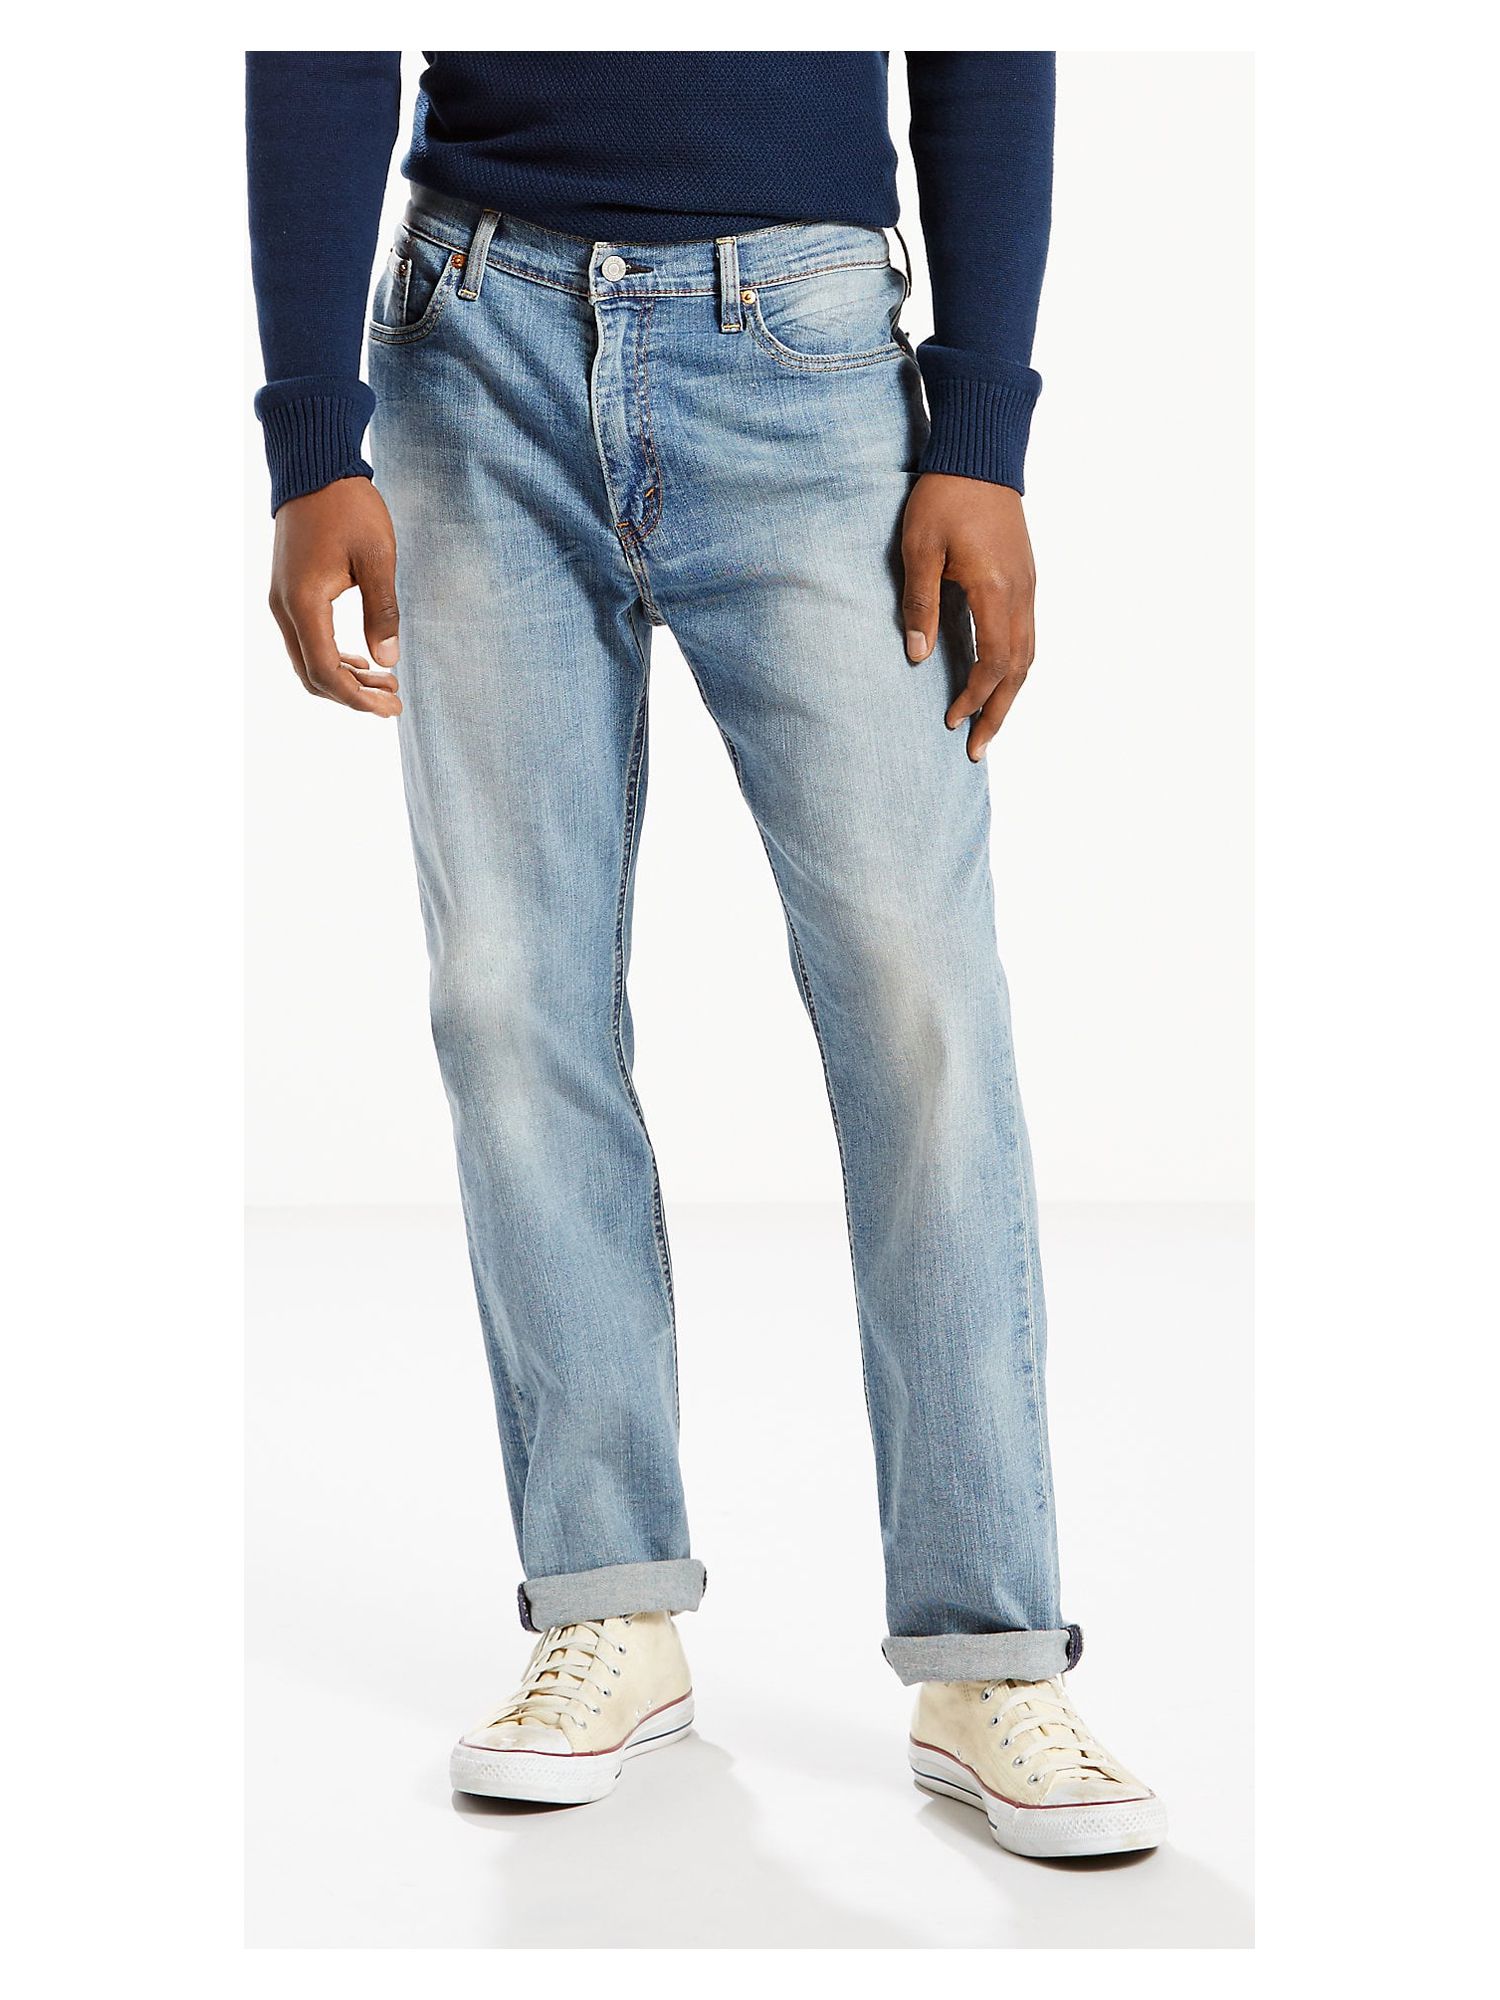 Levi's® Men's 541™ Athletic Fit Jeans - image 1 of 8